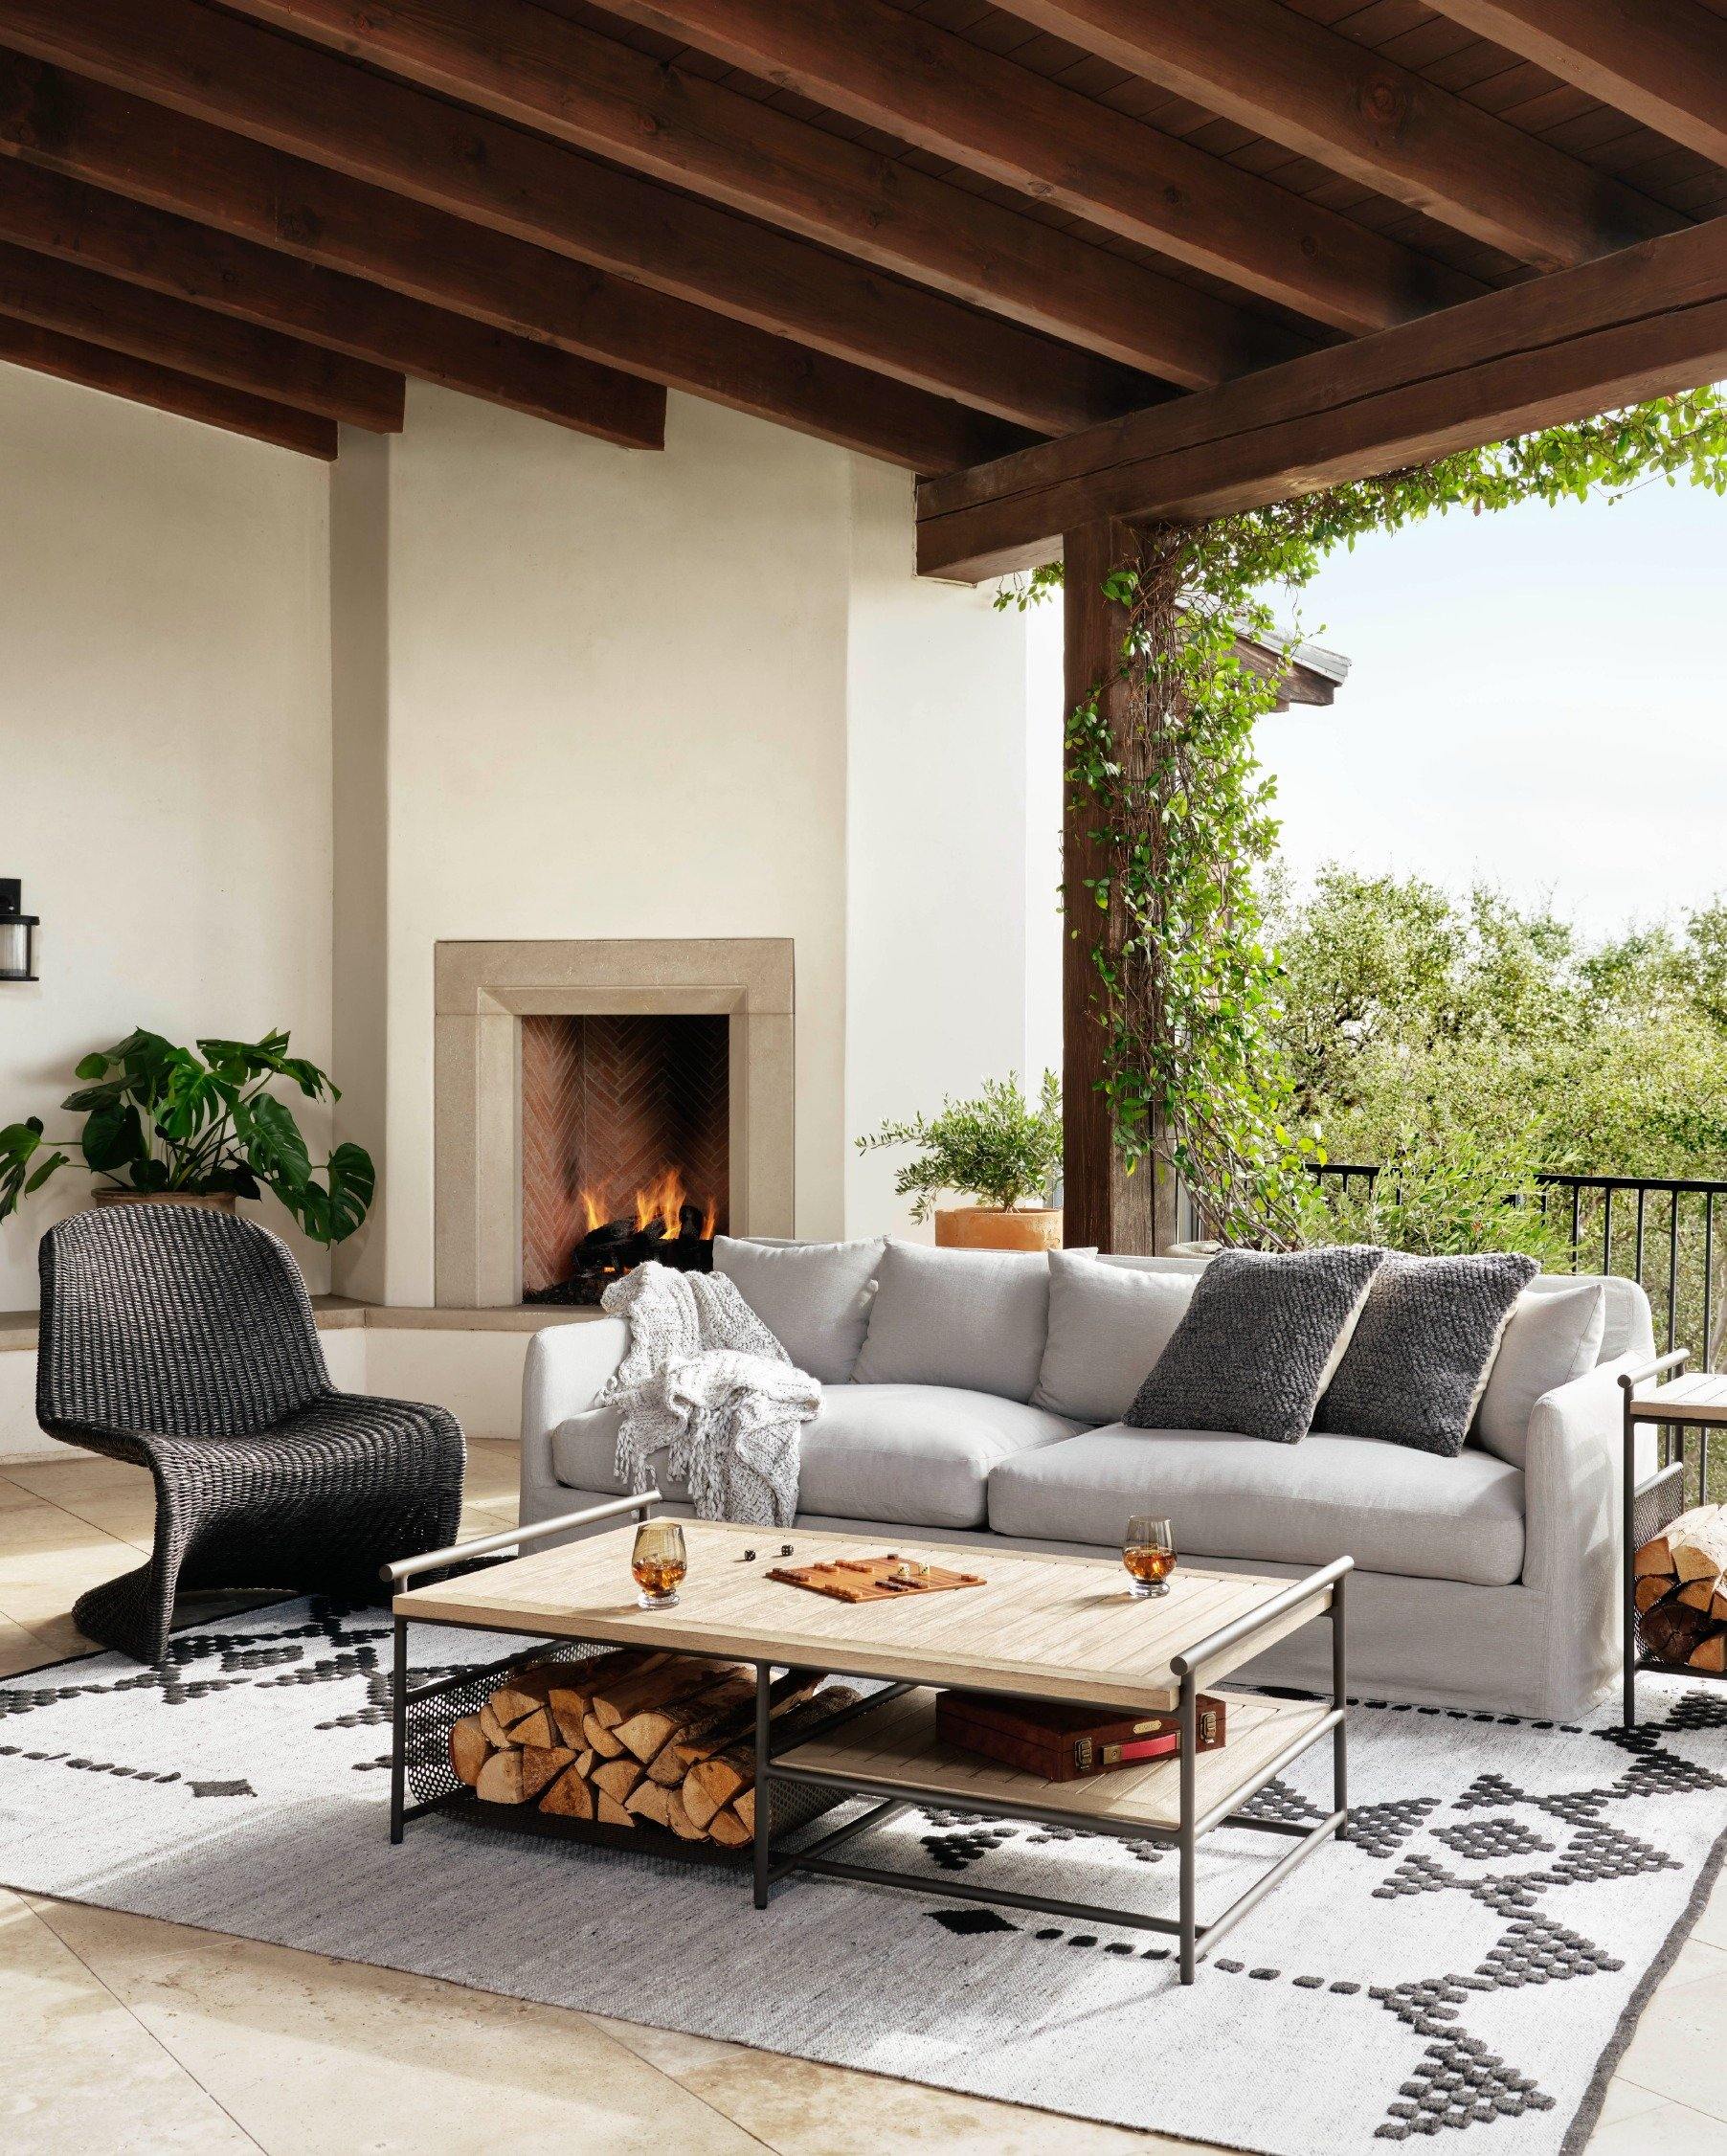 Portia Coal Outdoor Occasional Chair - Reimagine Designs - Outdoor, outdoor armchair, Outdoor Armchairs, outdoor chair